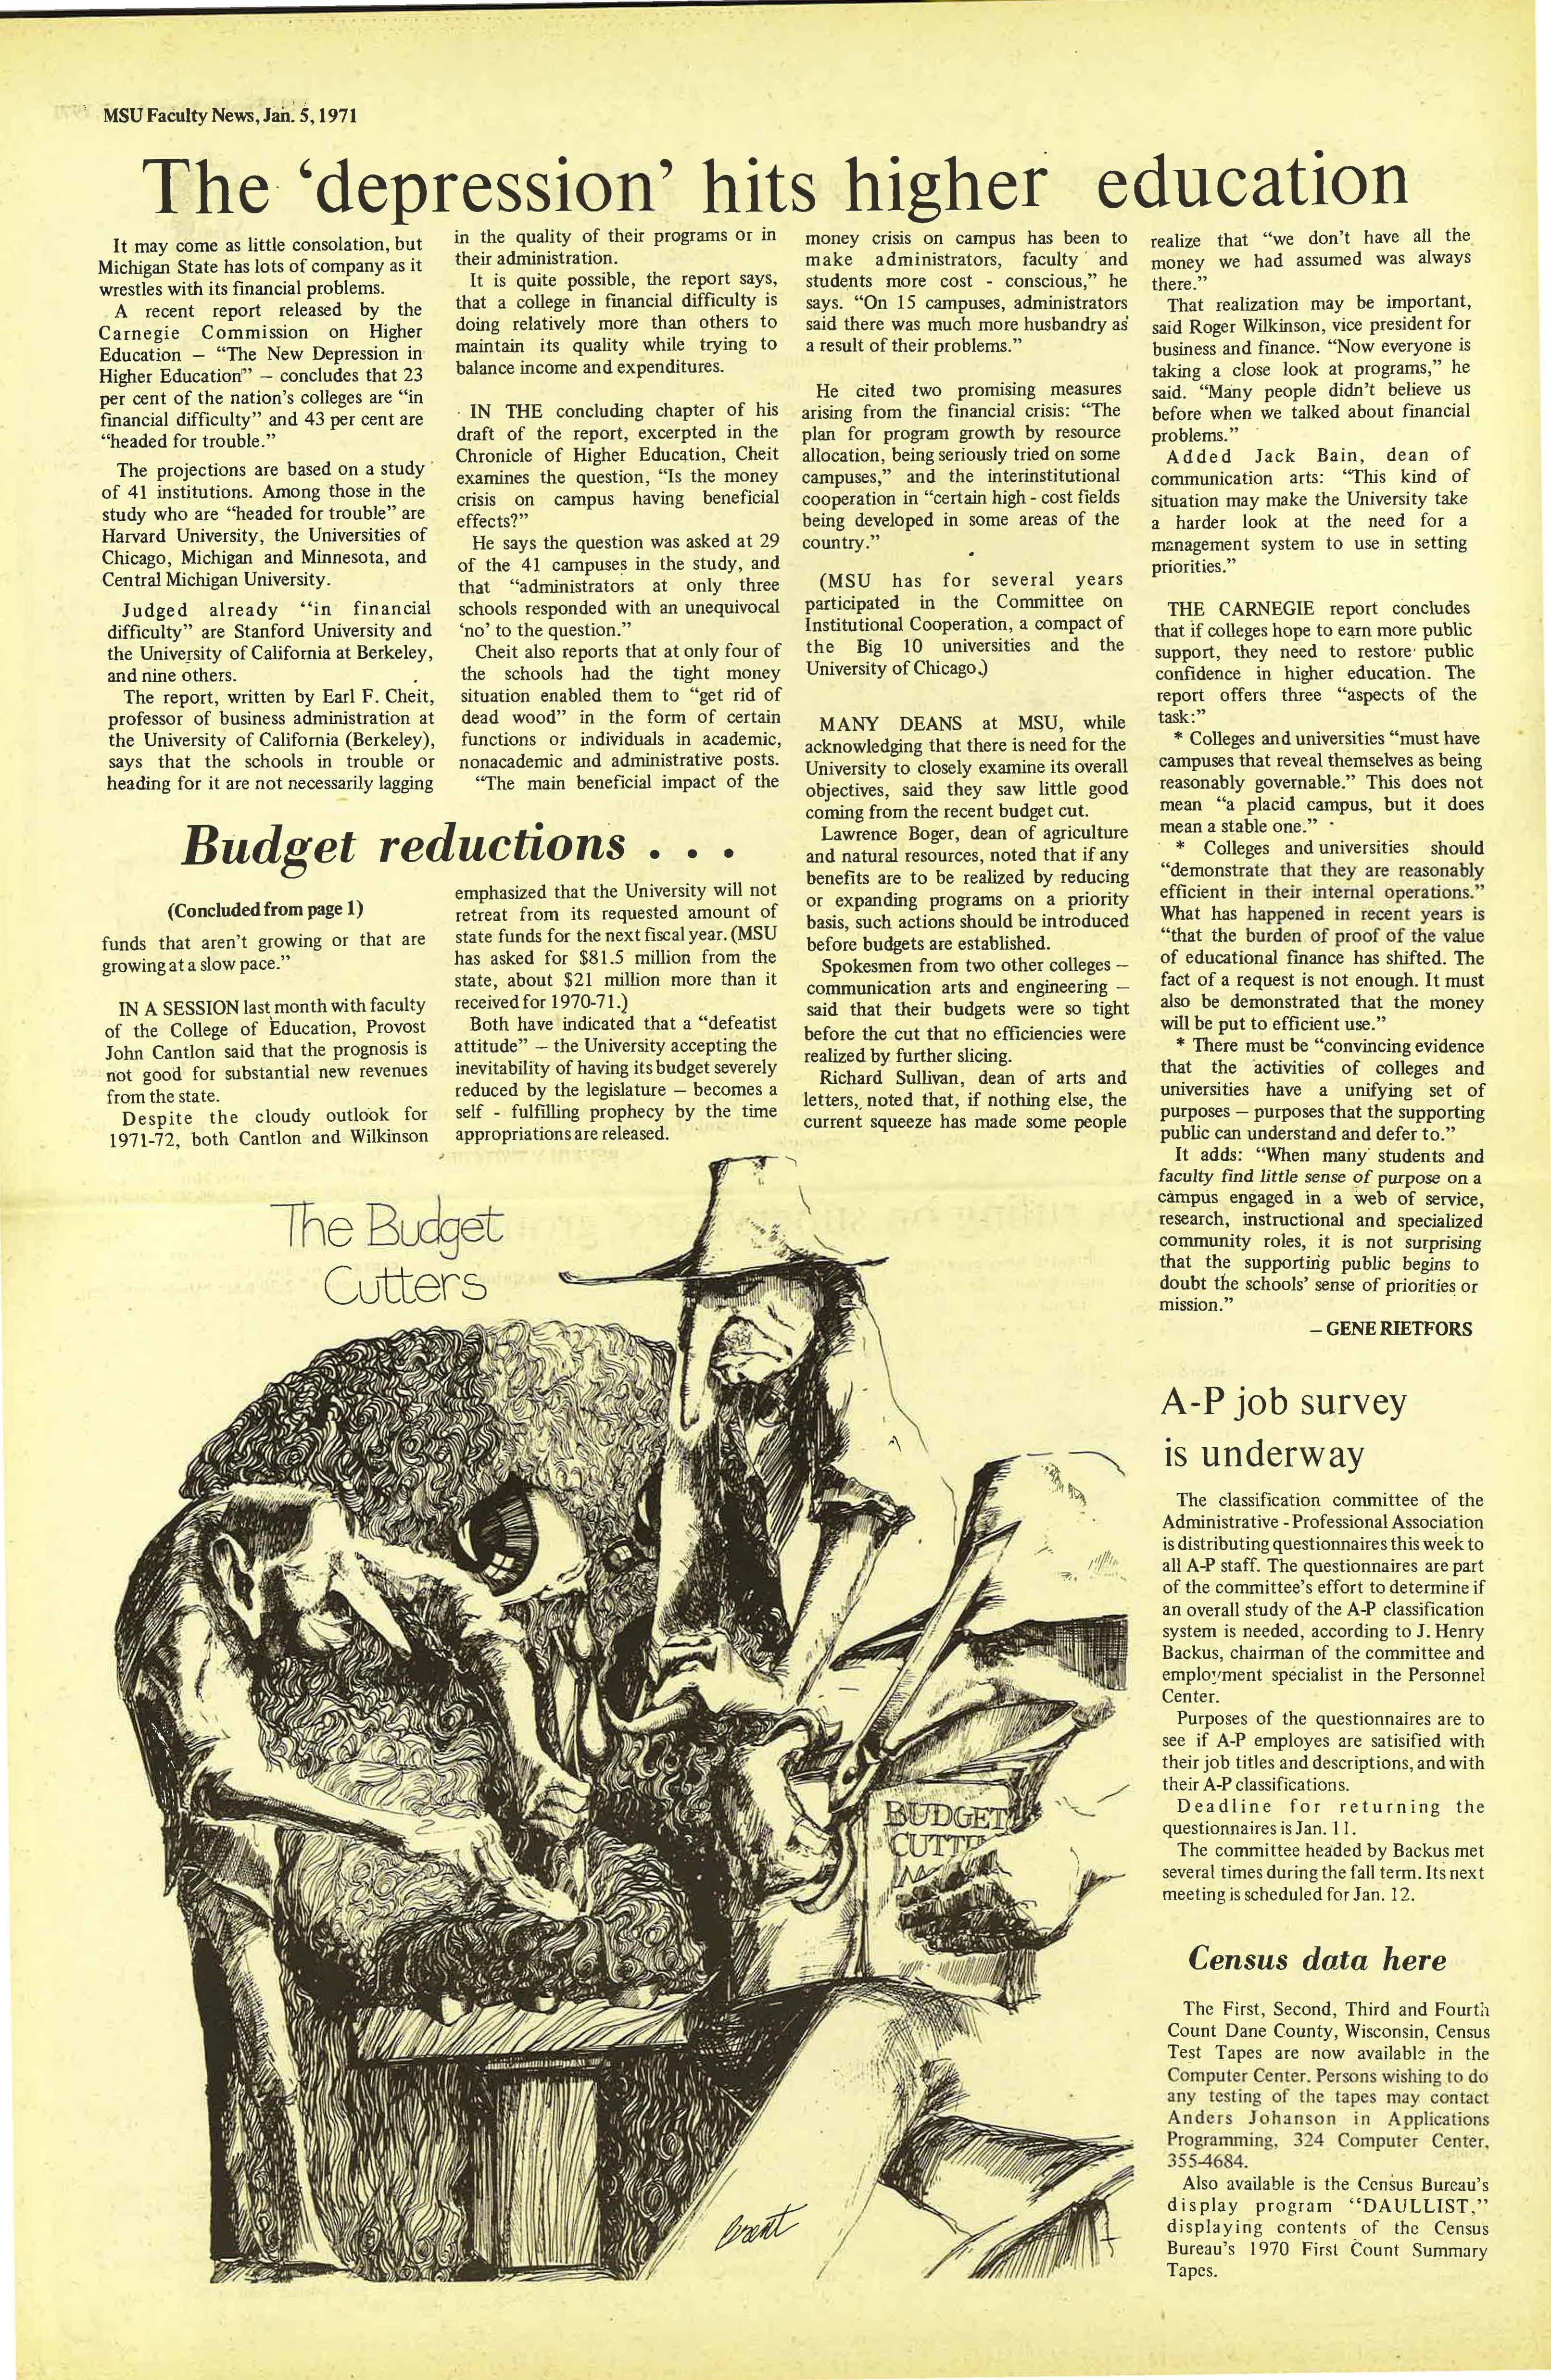 MSU News Bulletin, vol. 3, No. 10, November 24, 1971